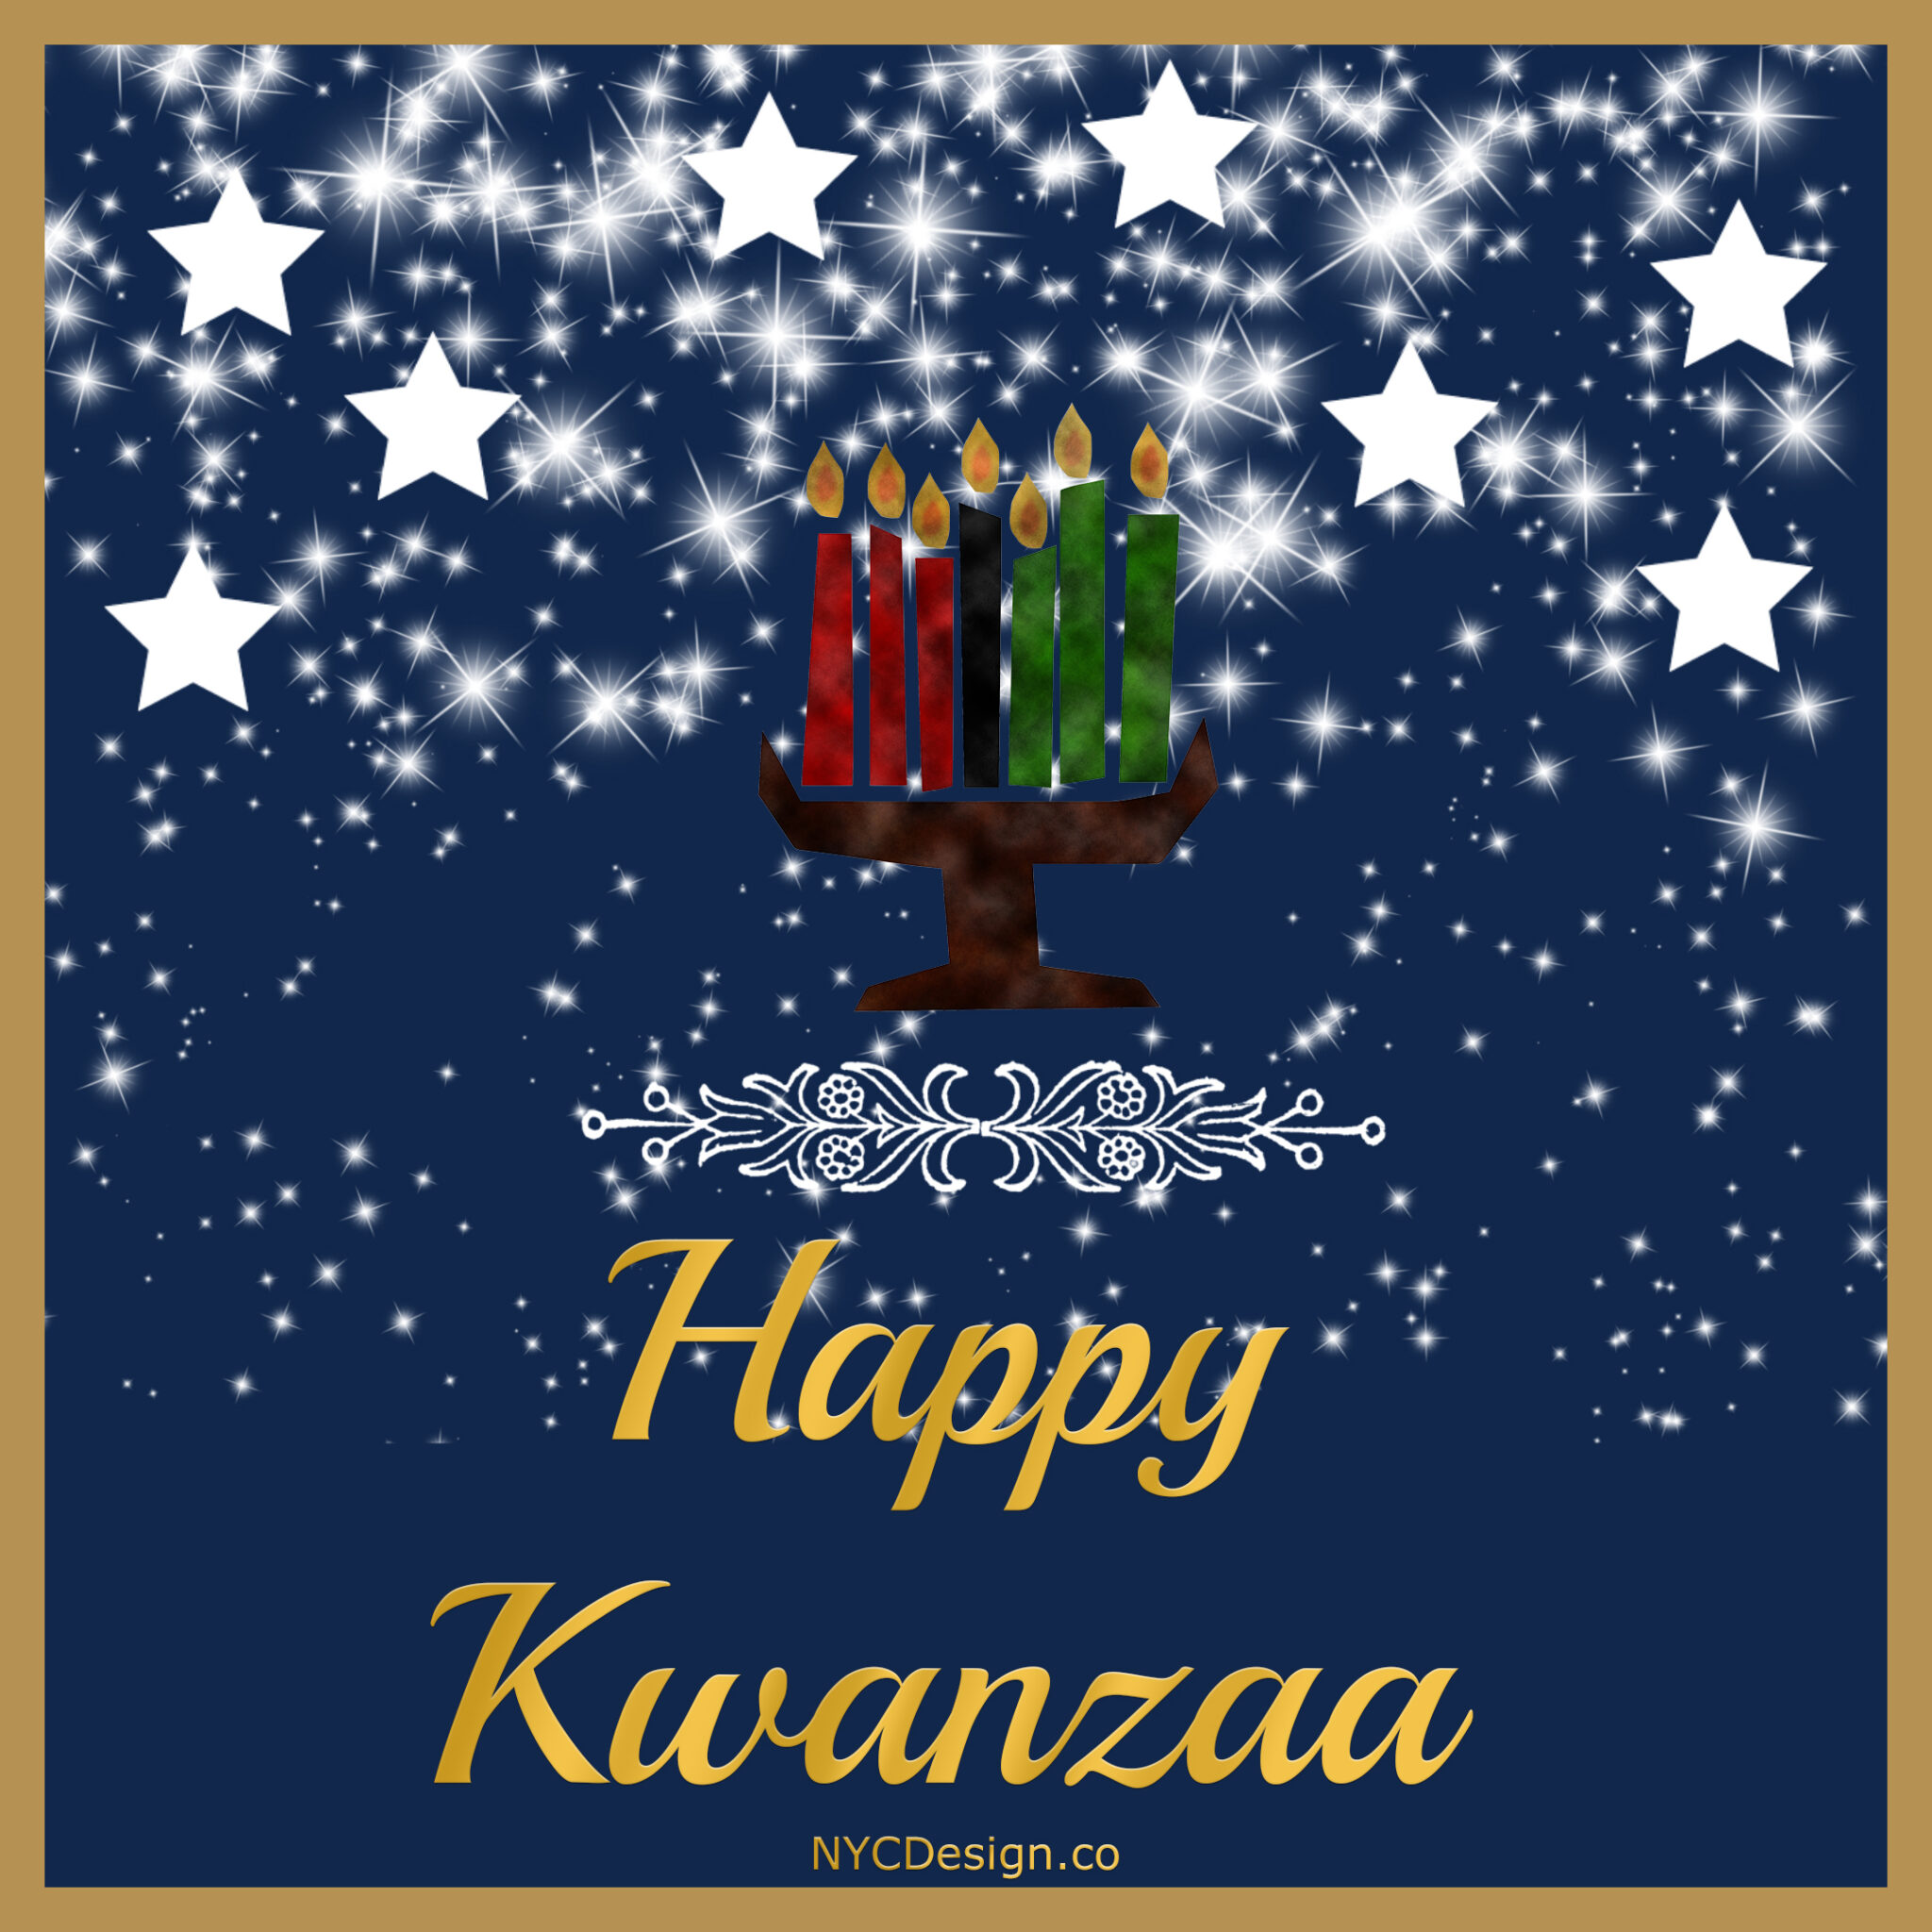 Happy Kwanzaa Cards, Free, Printable NYCDesign.co Calendars